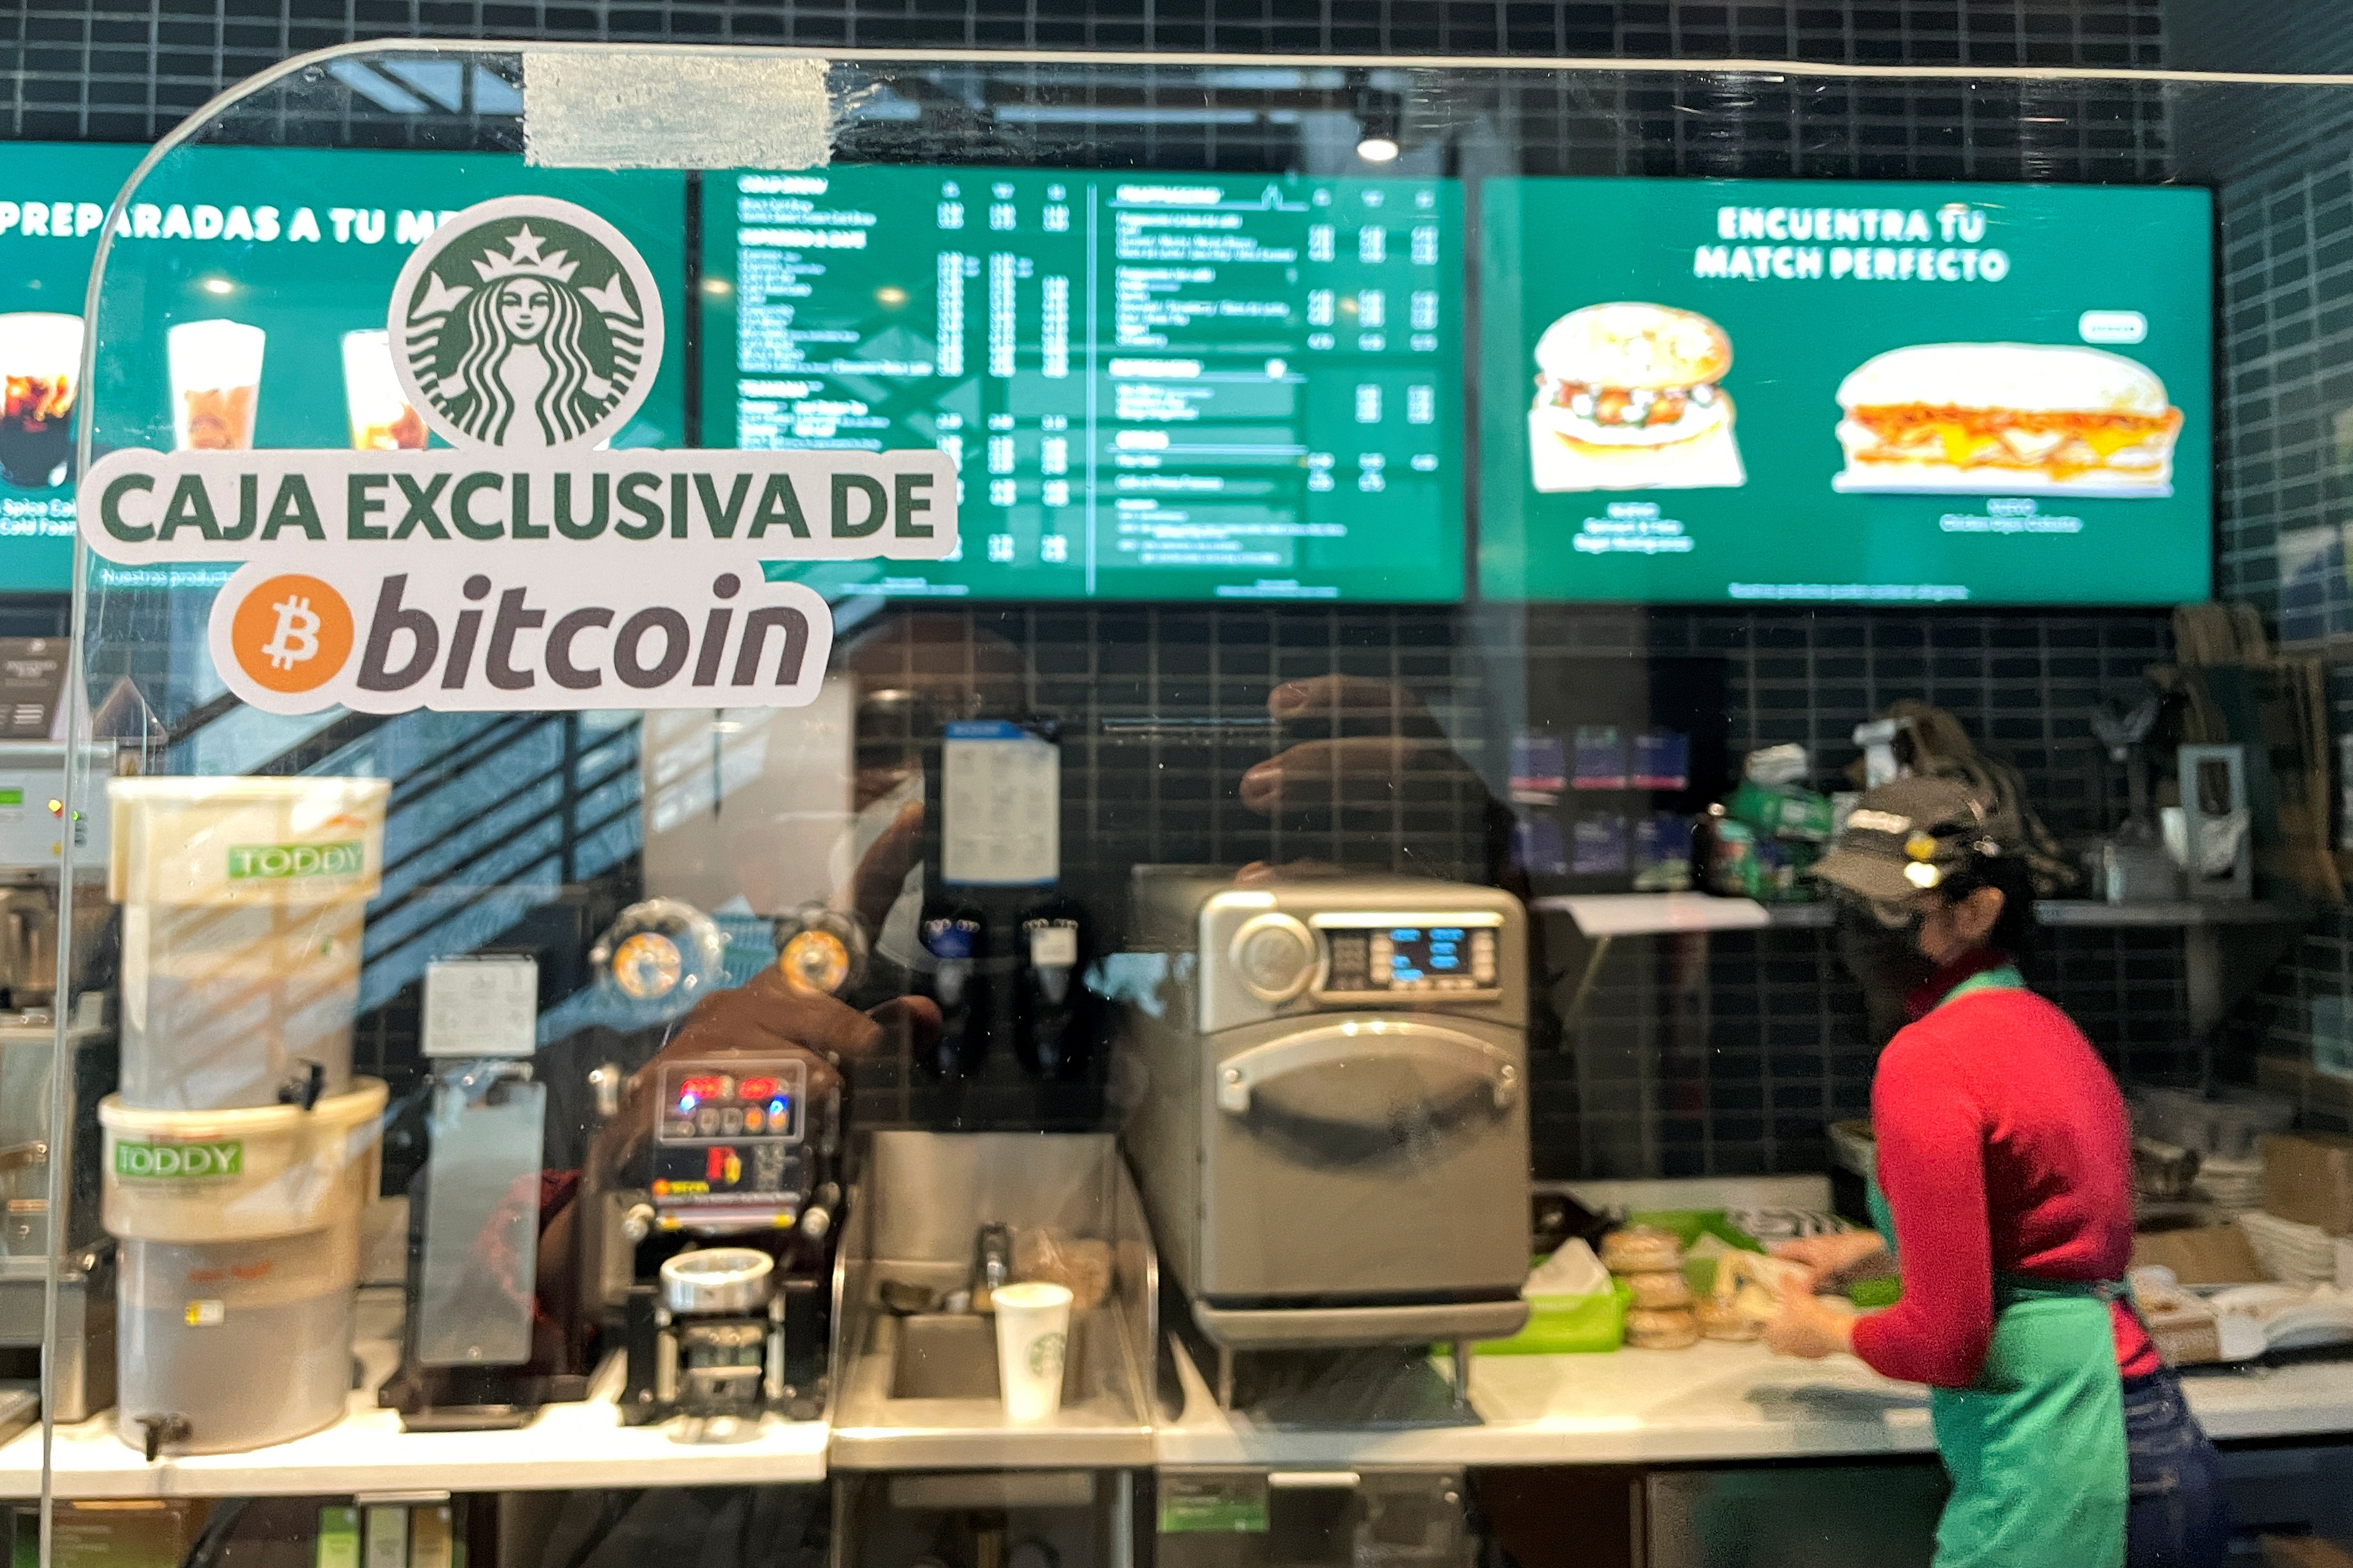 El Salvador adopts Bitcoin as legal tender